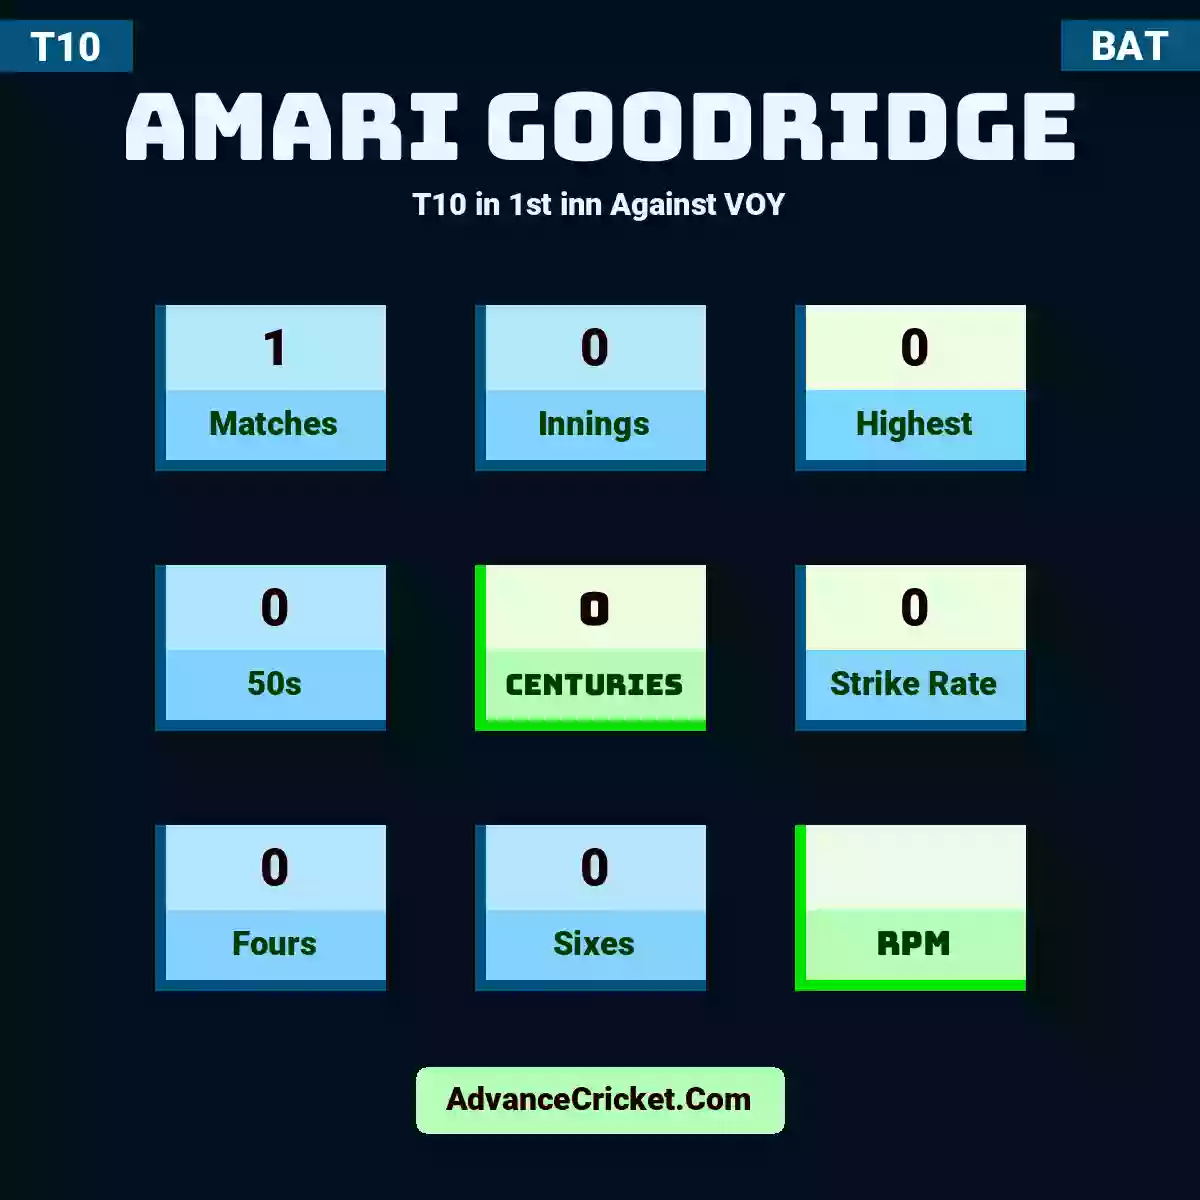 Amari Goodridge T10  in 1st inn Against VOY, Amari Goodridge played 1 matches, scored 0 runs as highest, 0 half-centuries, and 0 centuries, with a strike rate of 0. A.Goodridge hit 0 fours and 0 sixes.